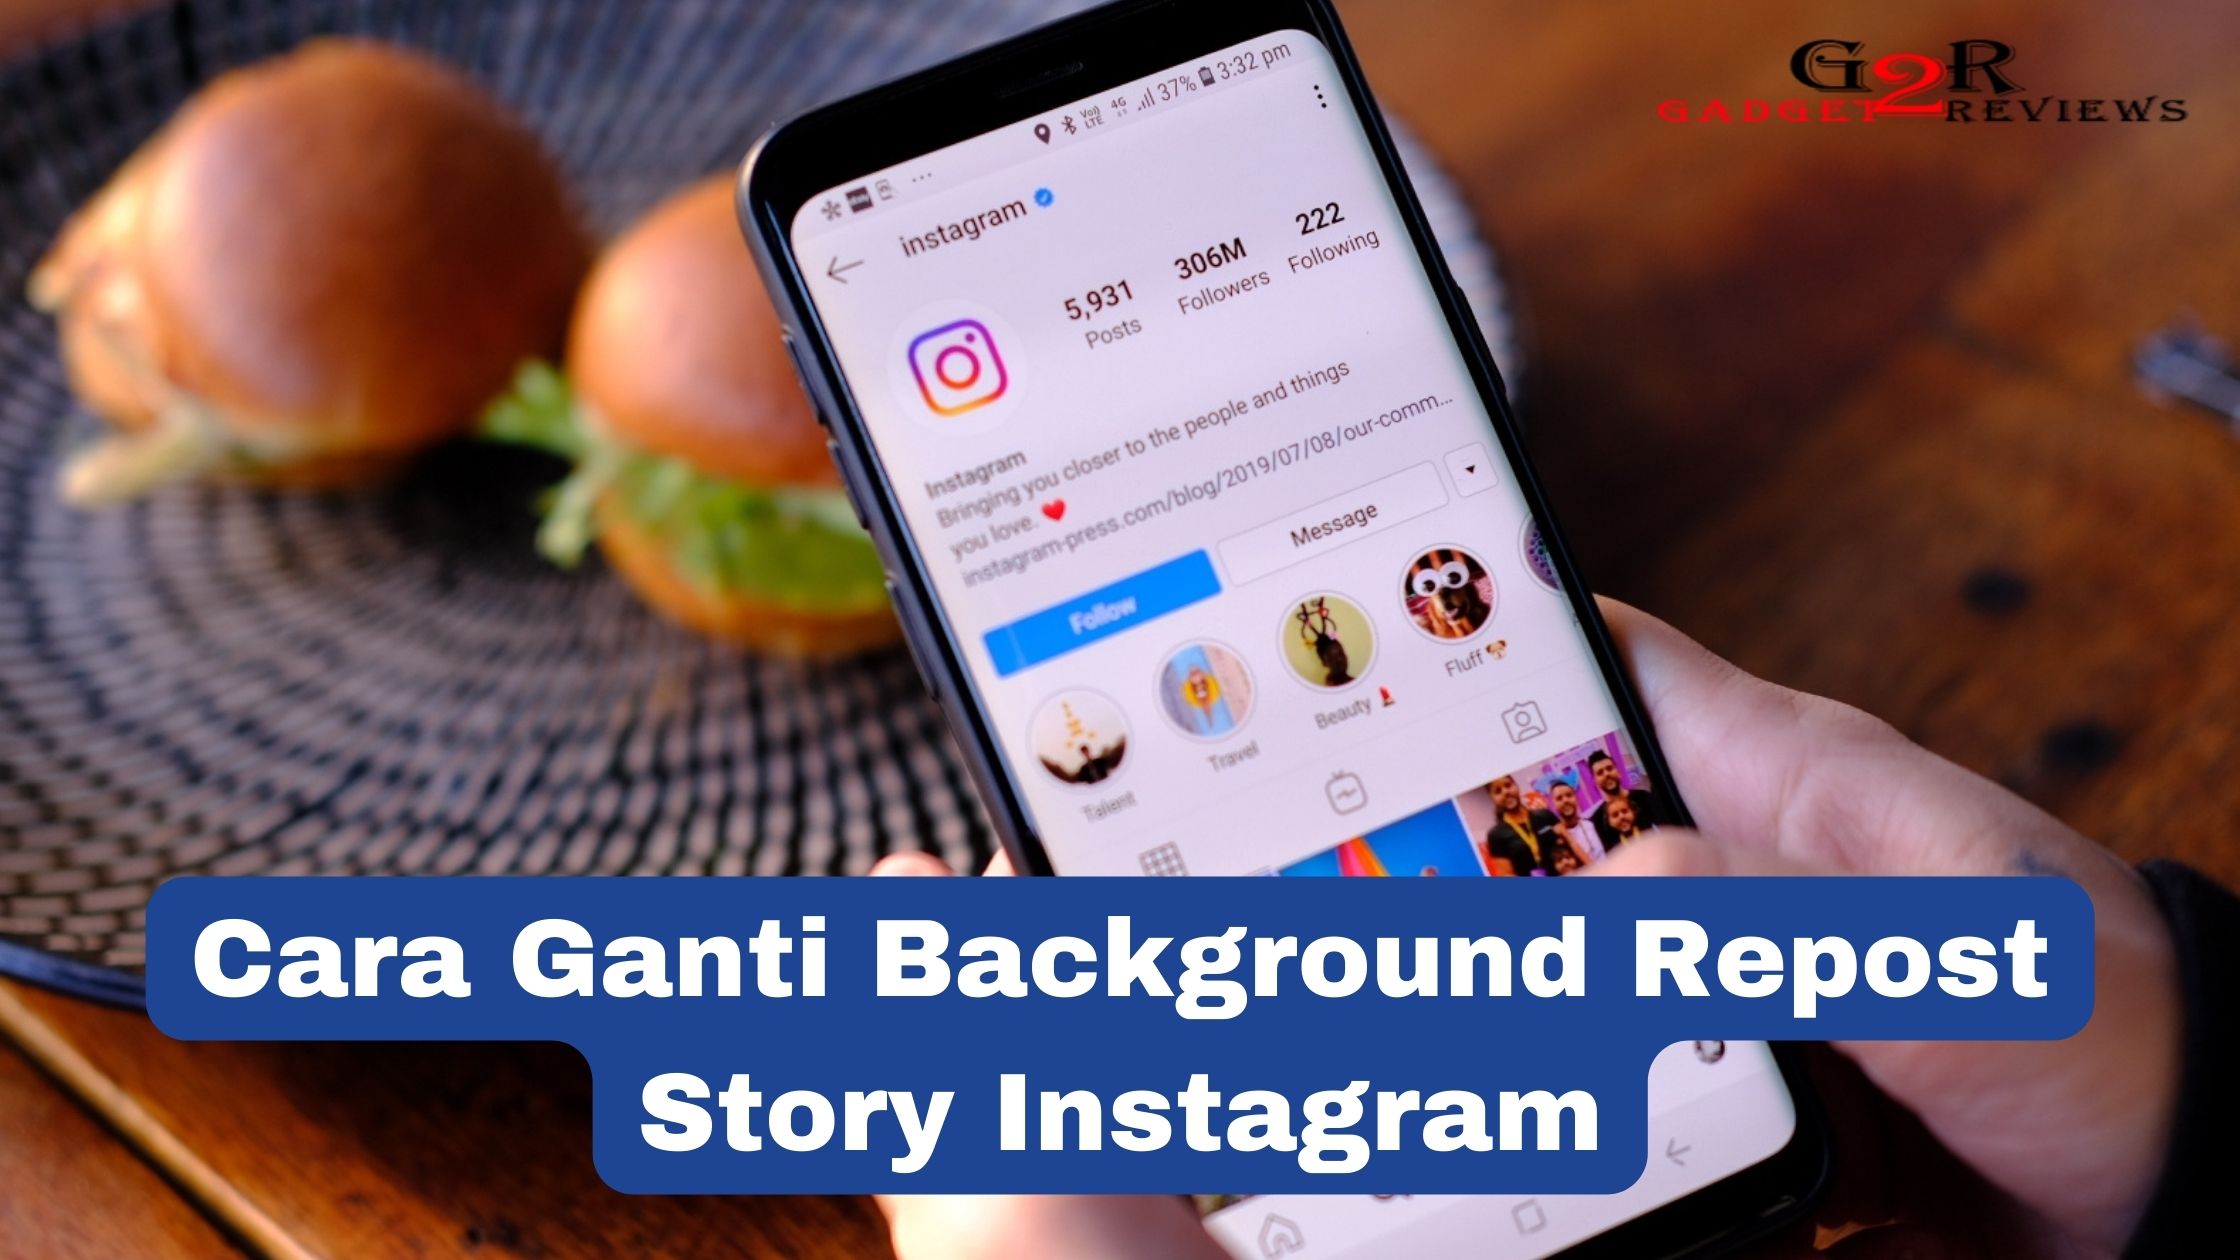 Cara Ganti Background Repost Story Instagram